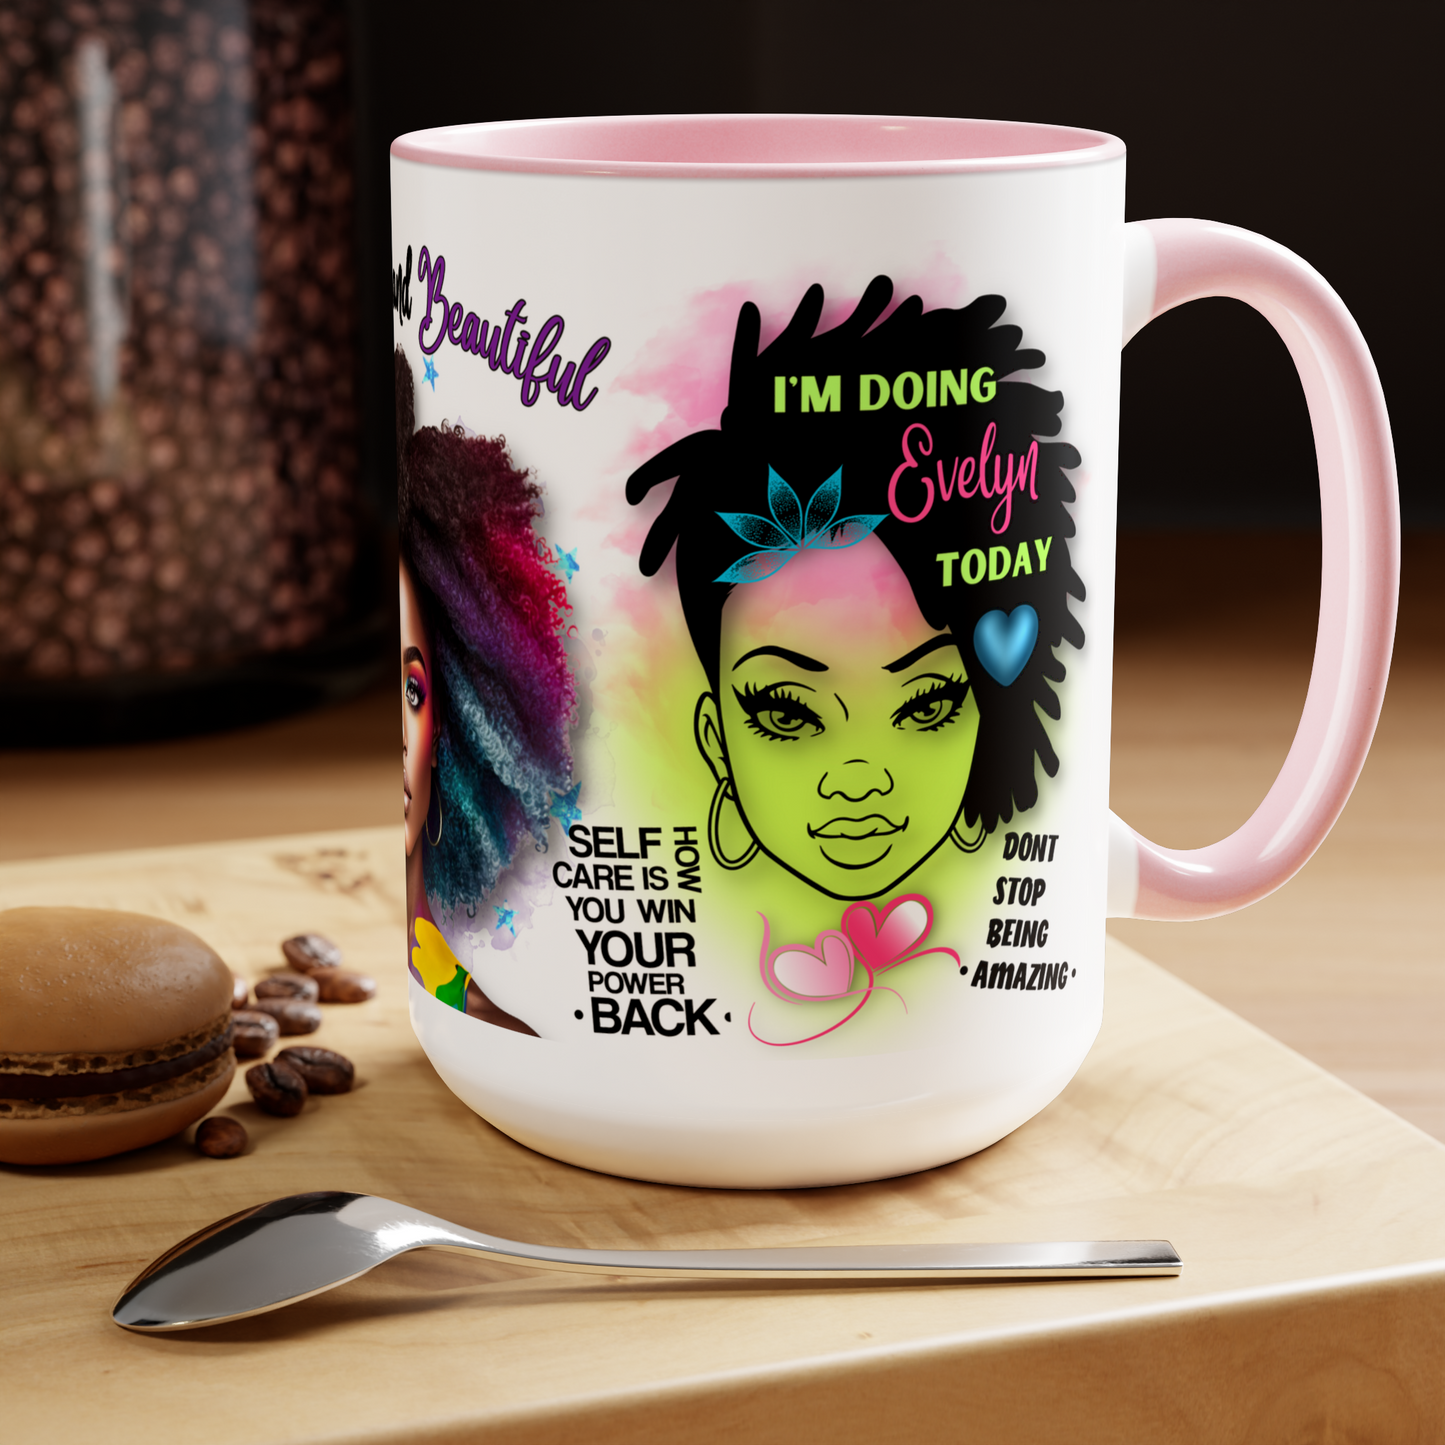 COLORFULL AND BEAUTIFUL (Personalized) 15oz Coffee mug